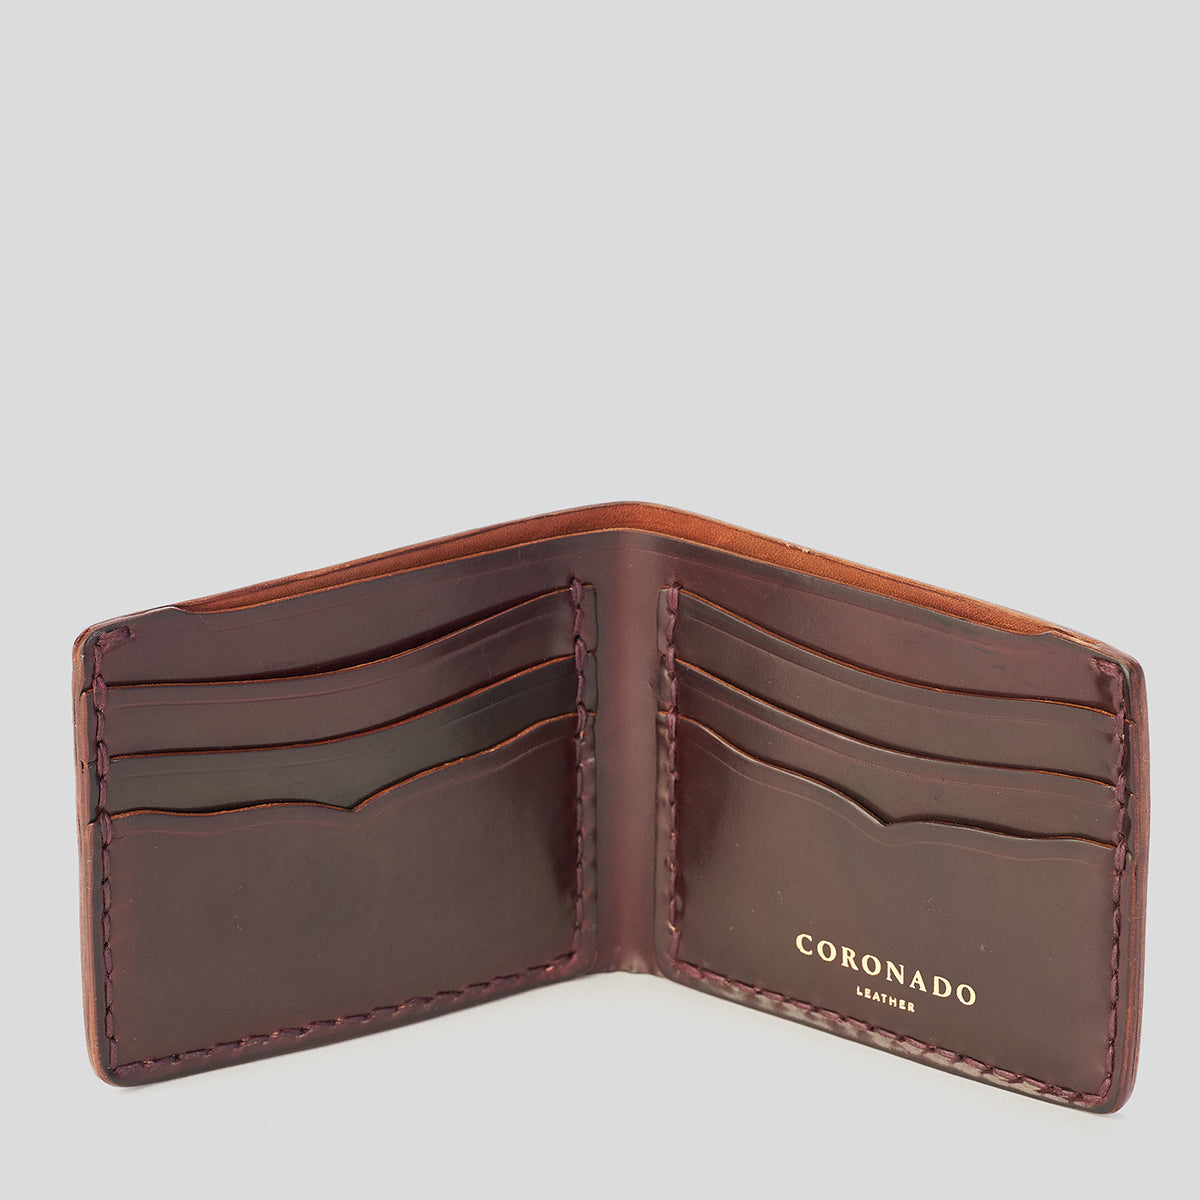 Horween® Shell Cordovan Wallet No.32